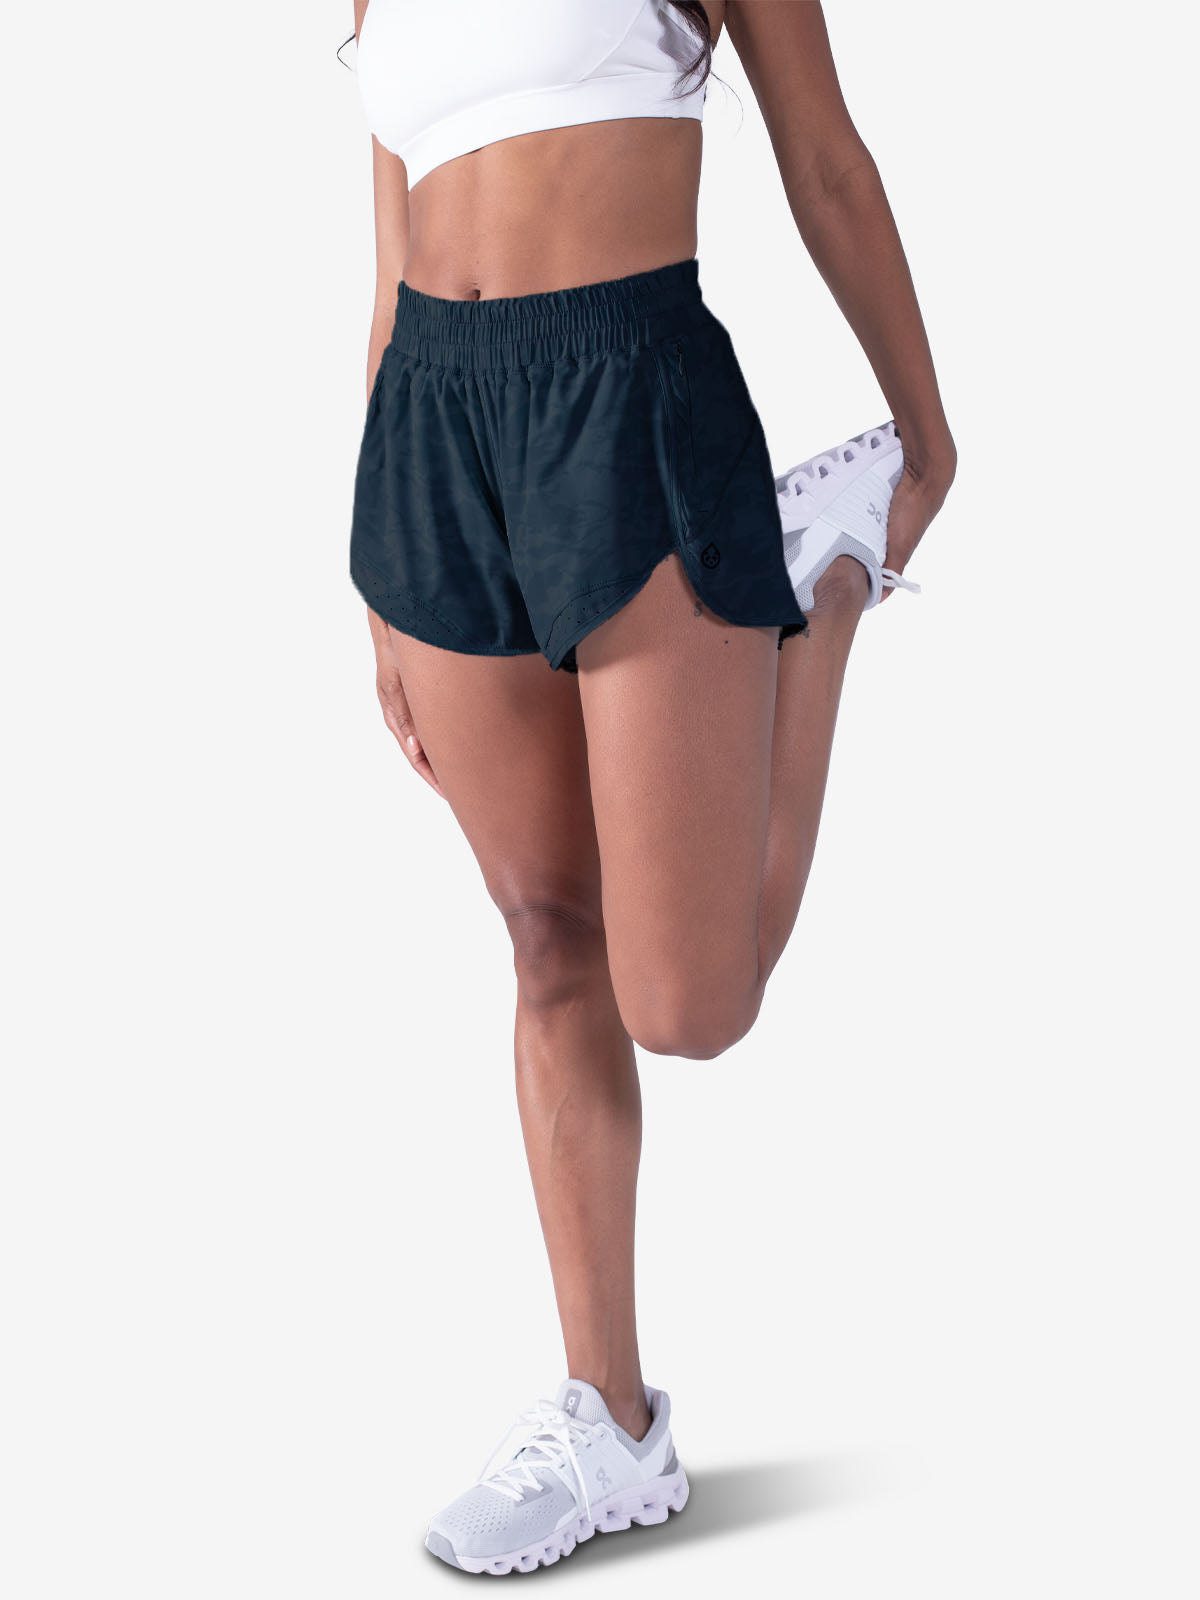 Tasc Women's Recess 4" Athletic Short Apparel Tasc Black Camo-986 Small 